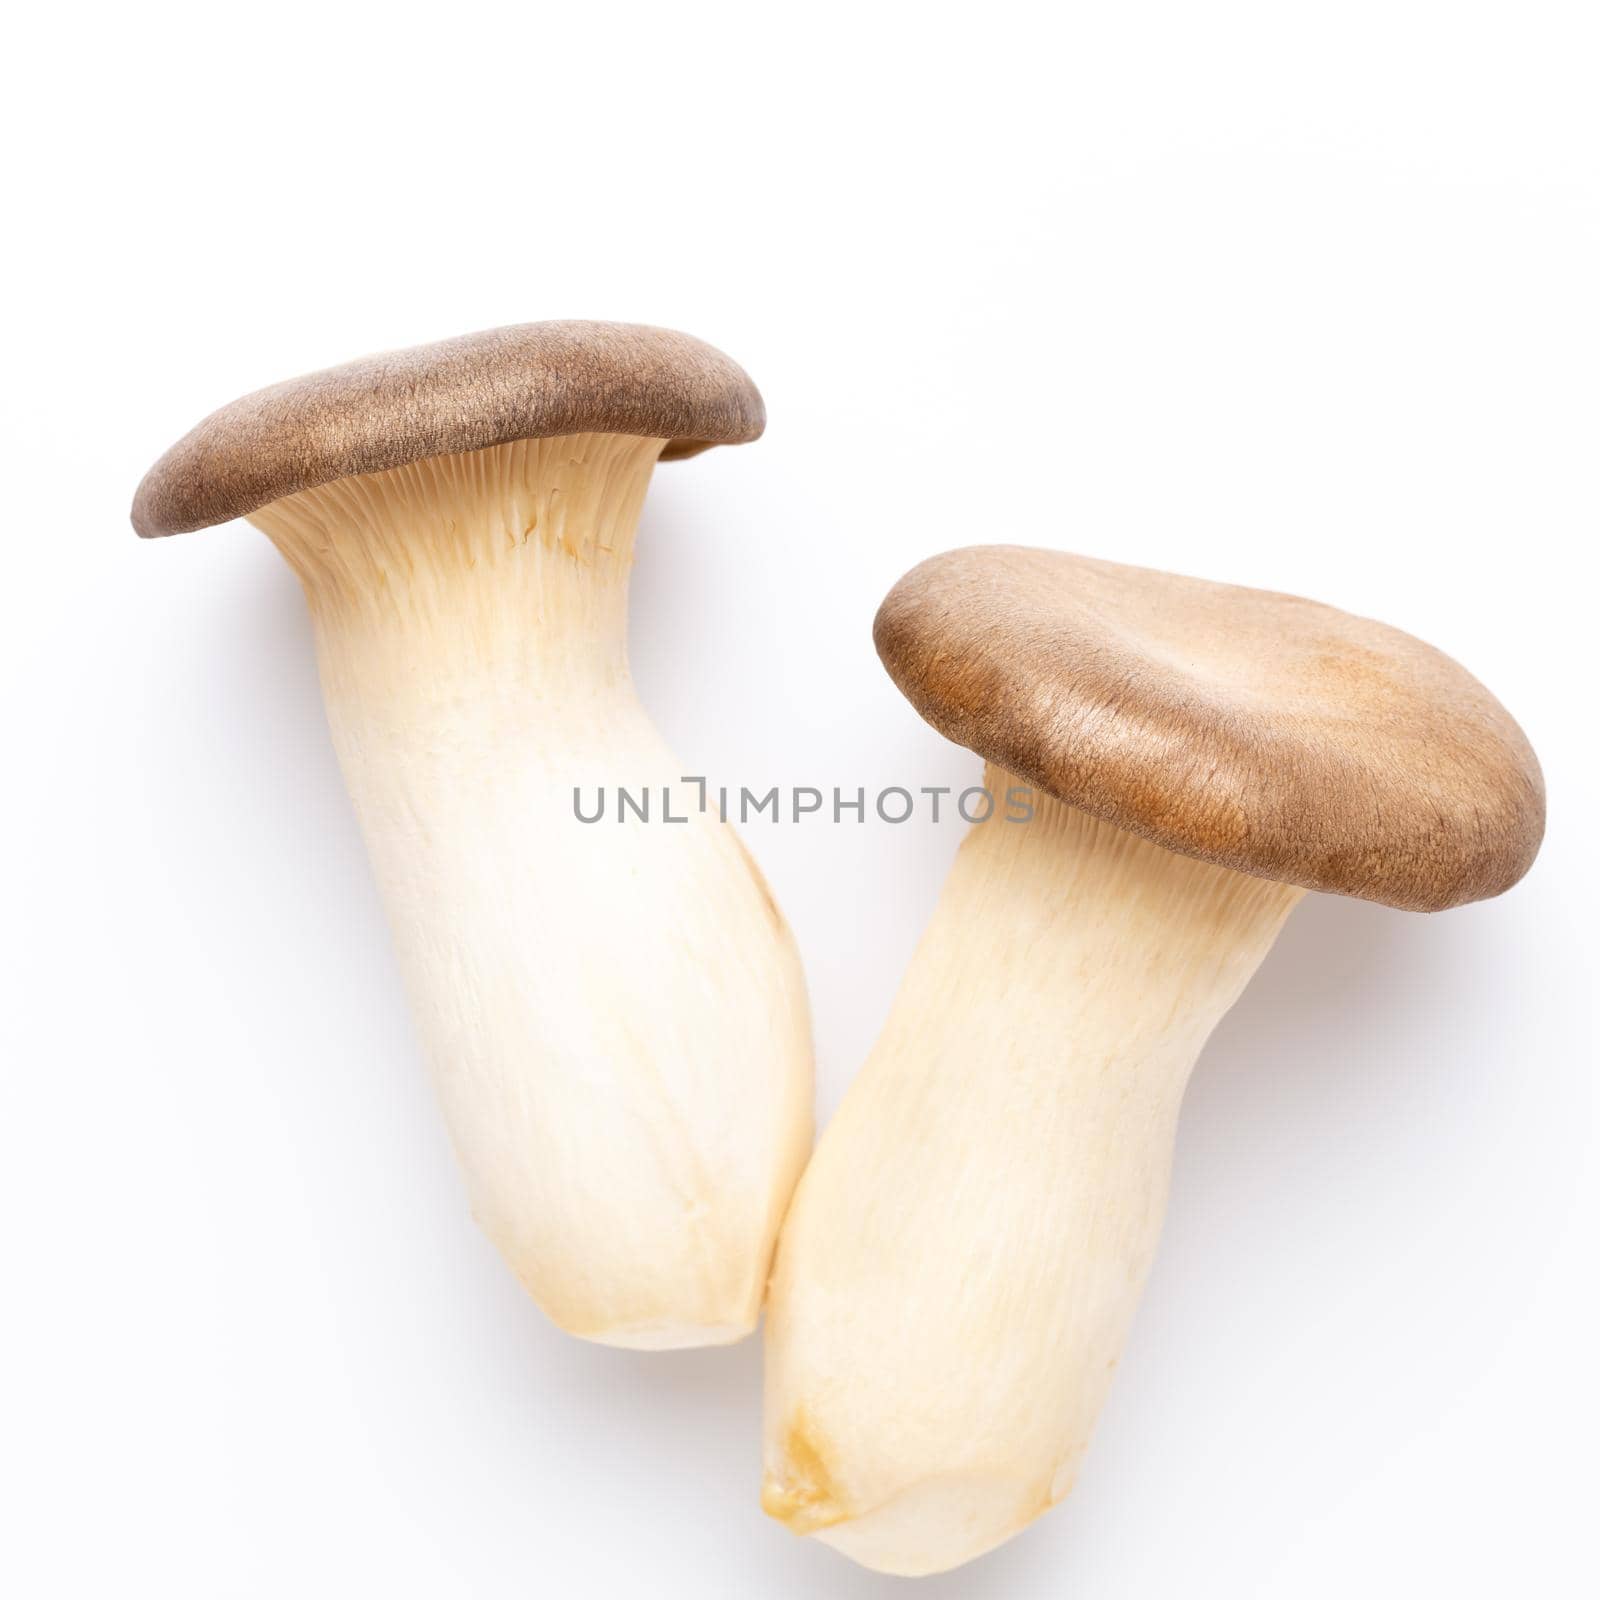 King oyster mushroom. Eryngii mushroom, on white background.